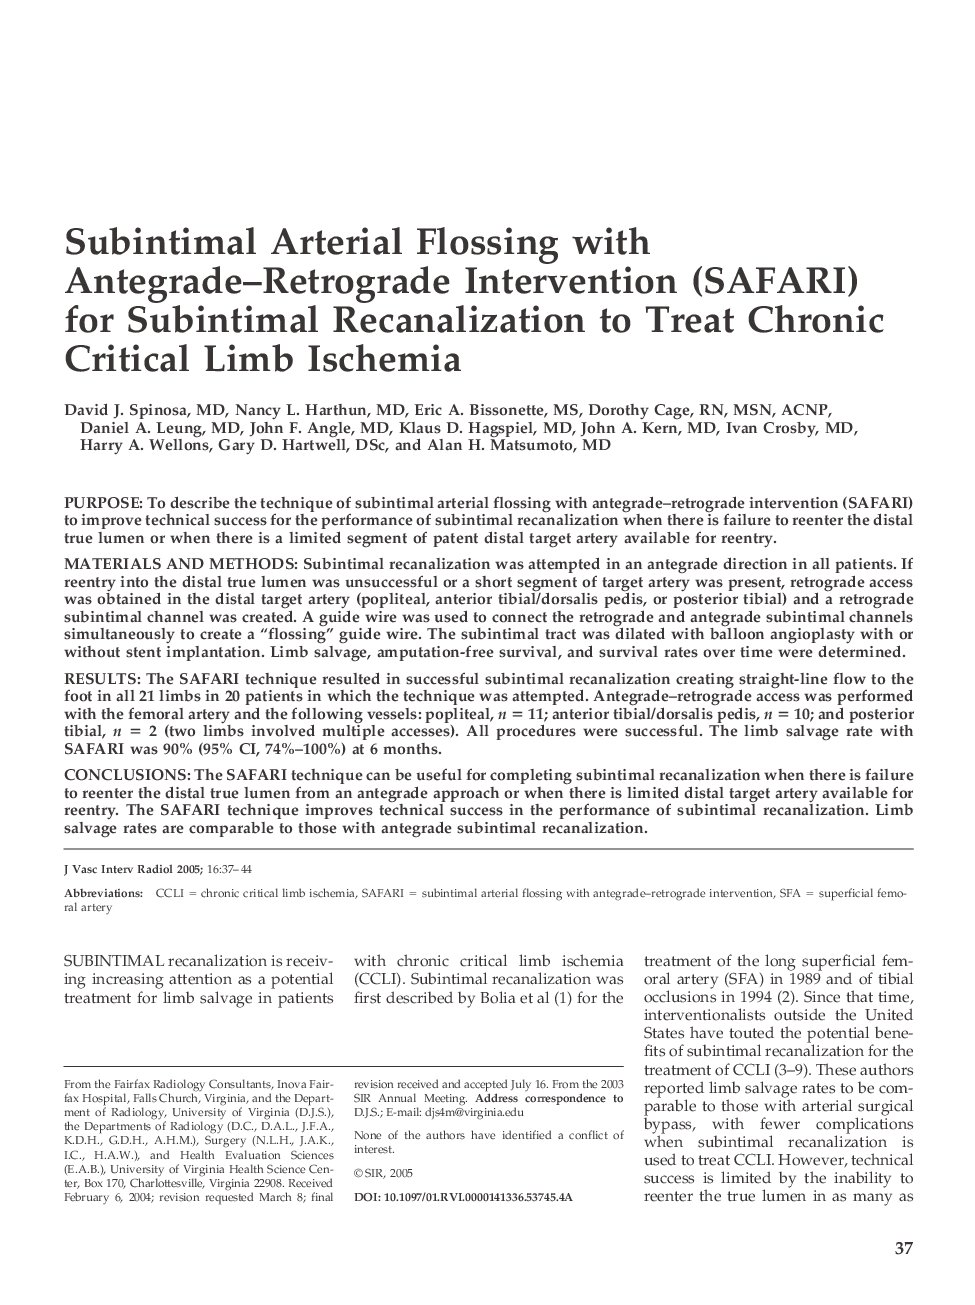 Subintimal Arterial Flossing with Antegrade-Retrograde Intervention (SAFARI) for Subintimal Recanalization to Treat Chronic Critical Limb Ischemia